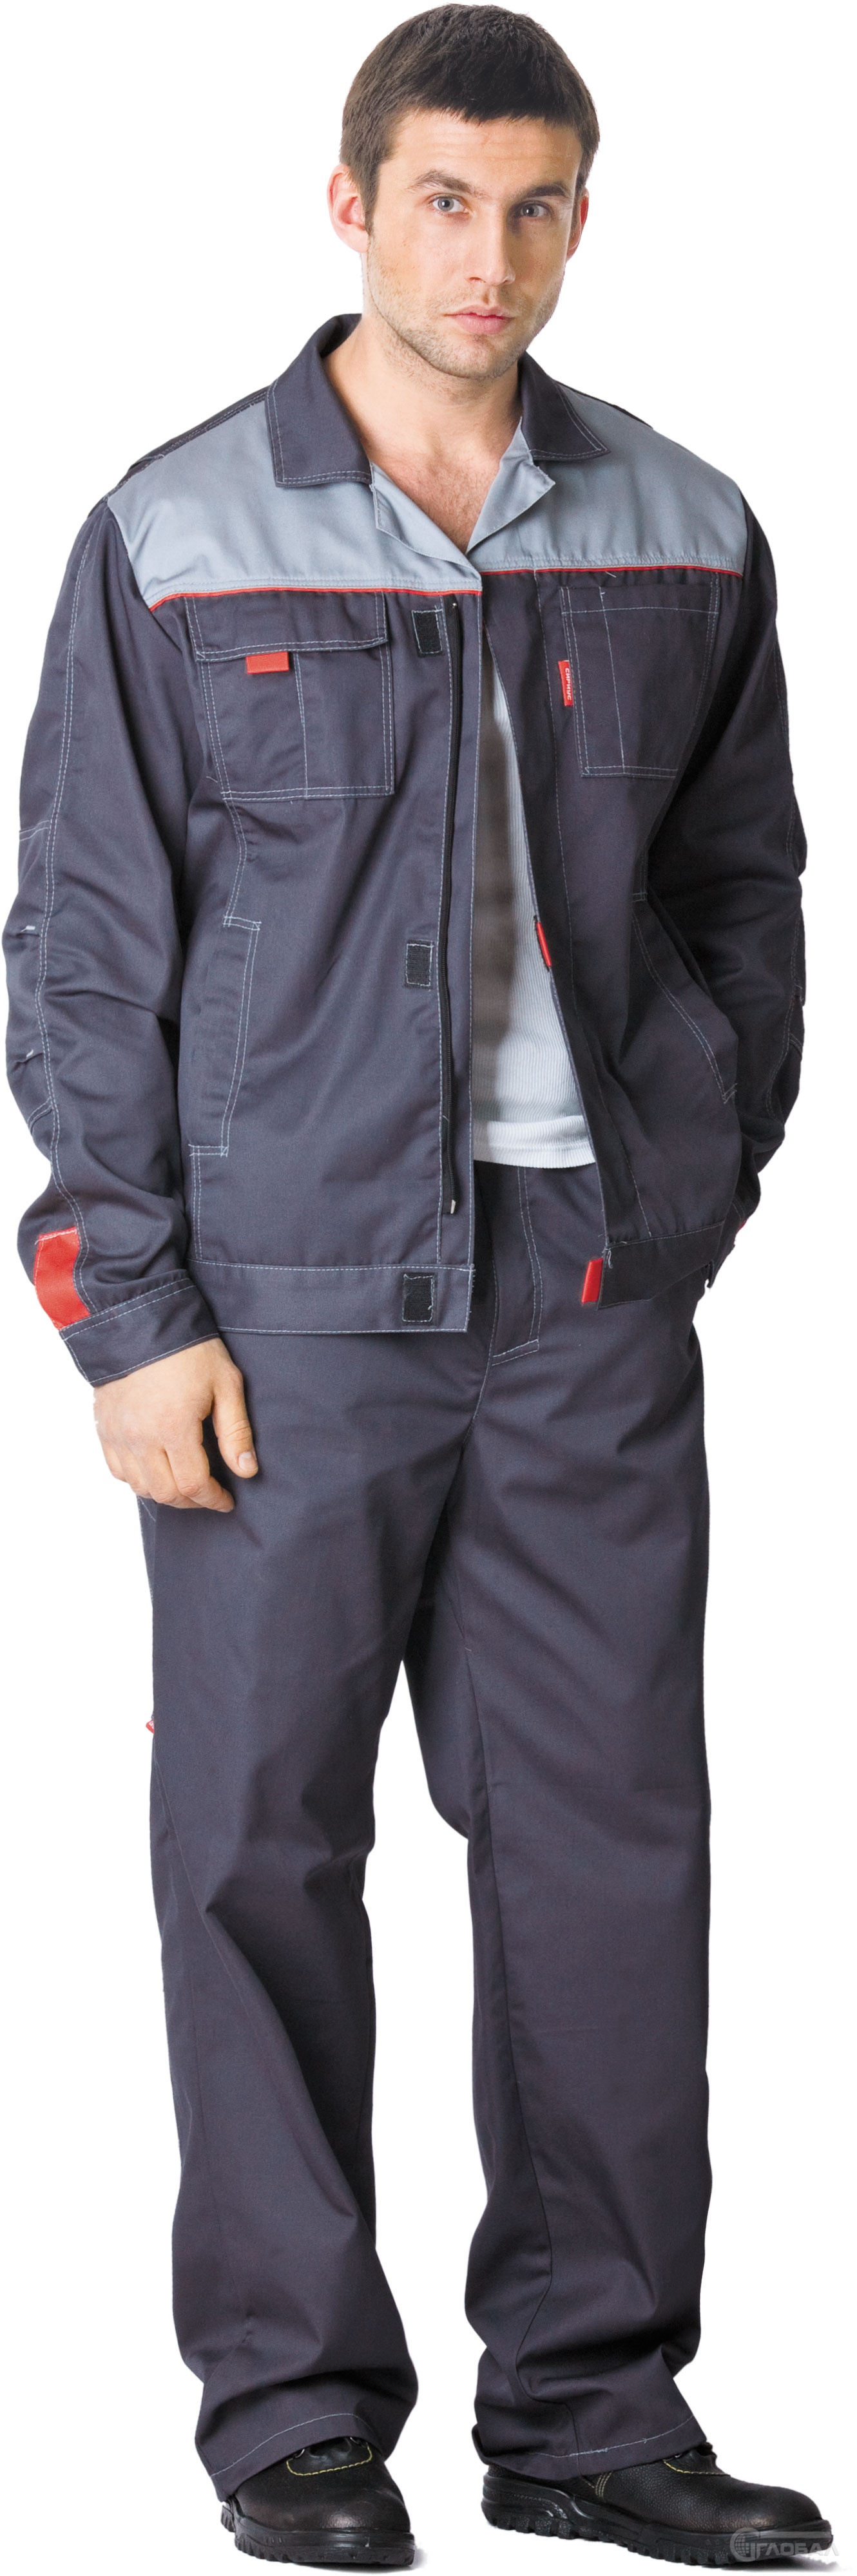 Костюм «ФАВОРИТНЫЙ-1» (куртка и брюки), ткань «Твил», цвет тёмно-серый + серый. Фото �2